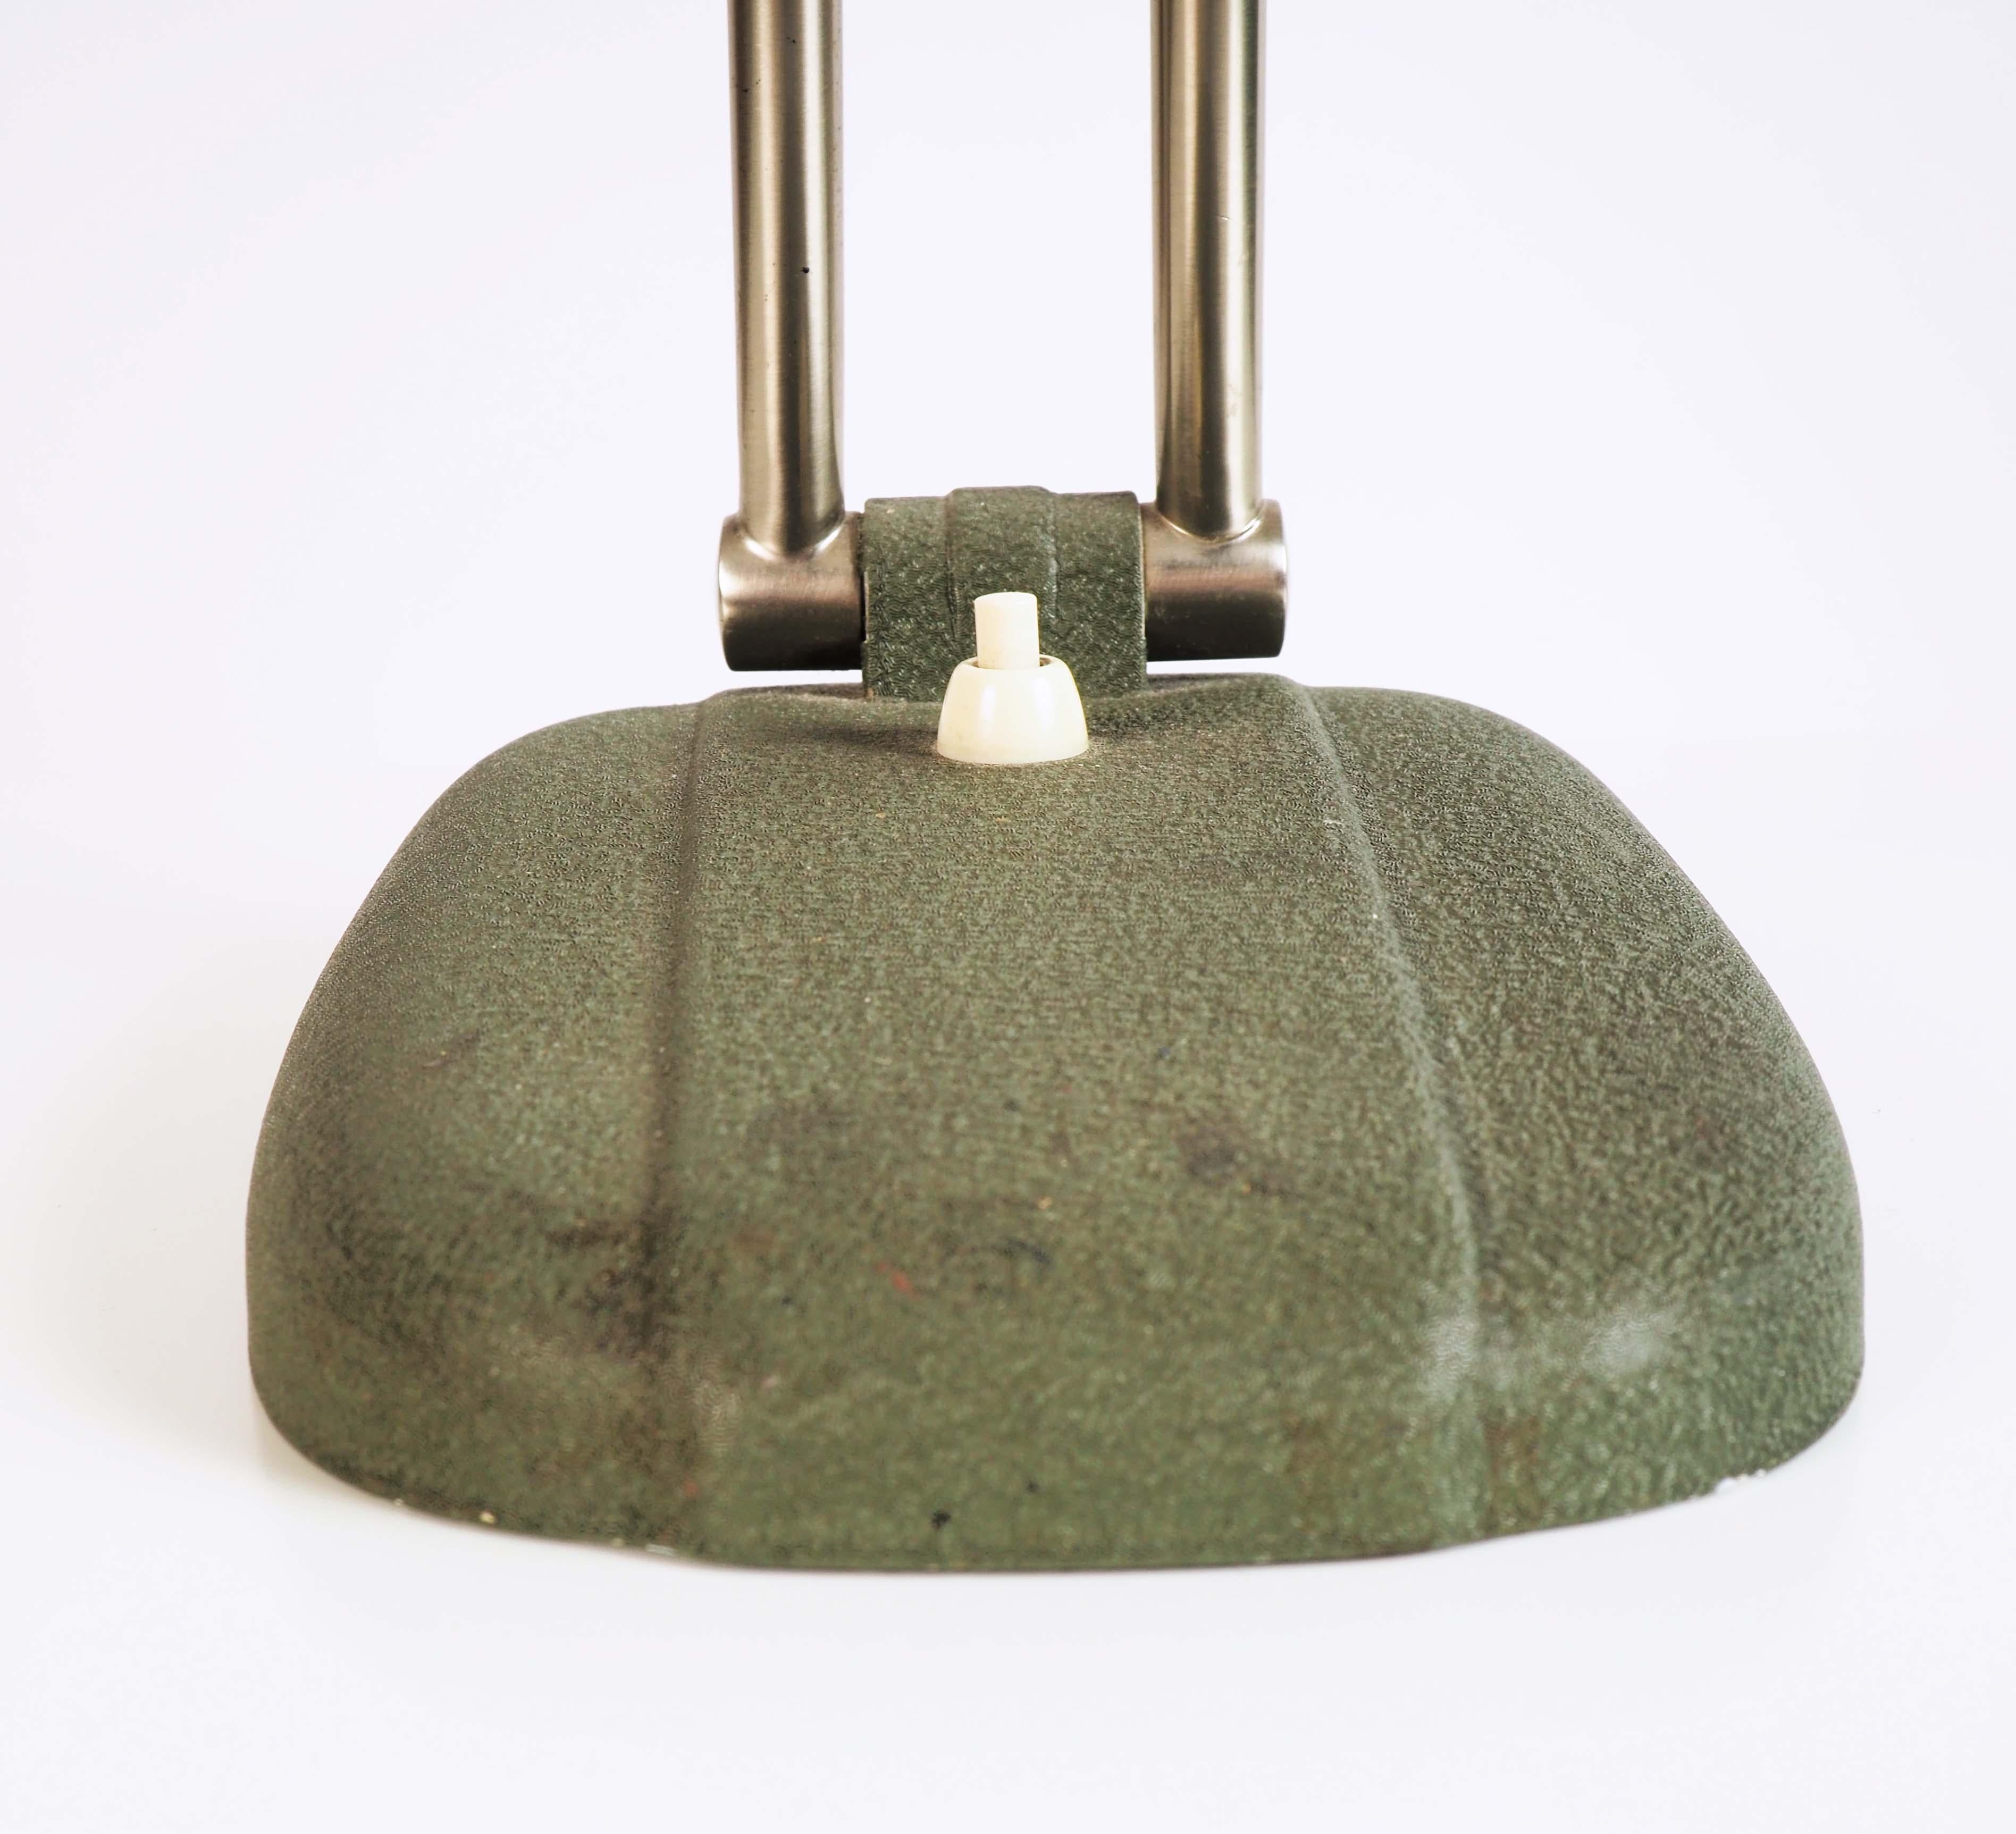 Table Lamp by Siegfried Giedion (Bauhaus)